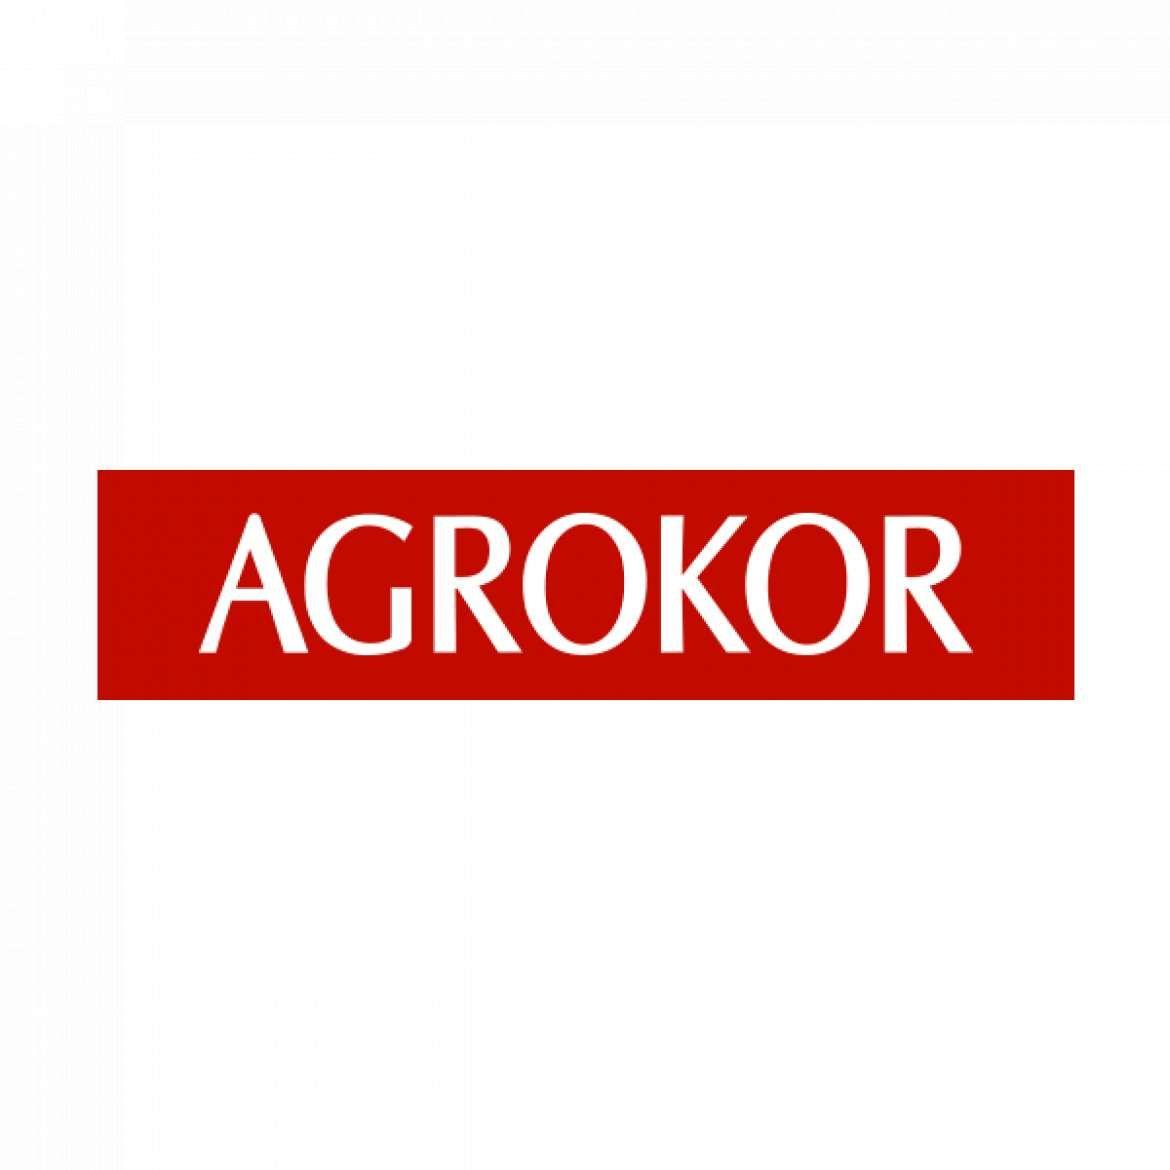 Croatian Company Logo - Agrokor: Has Gigantic Croatian Company Really Survived Crisis?